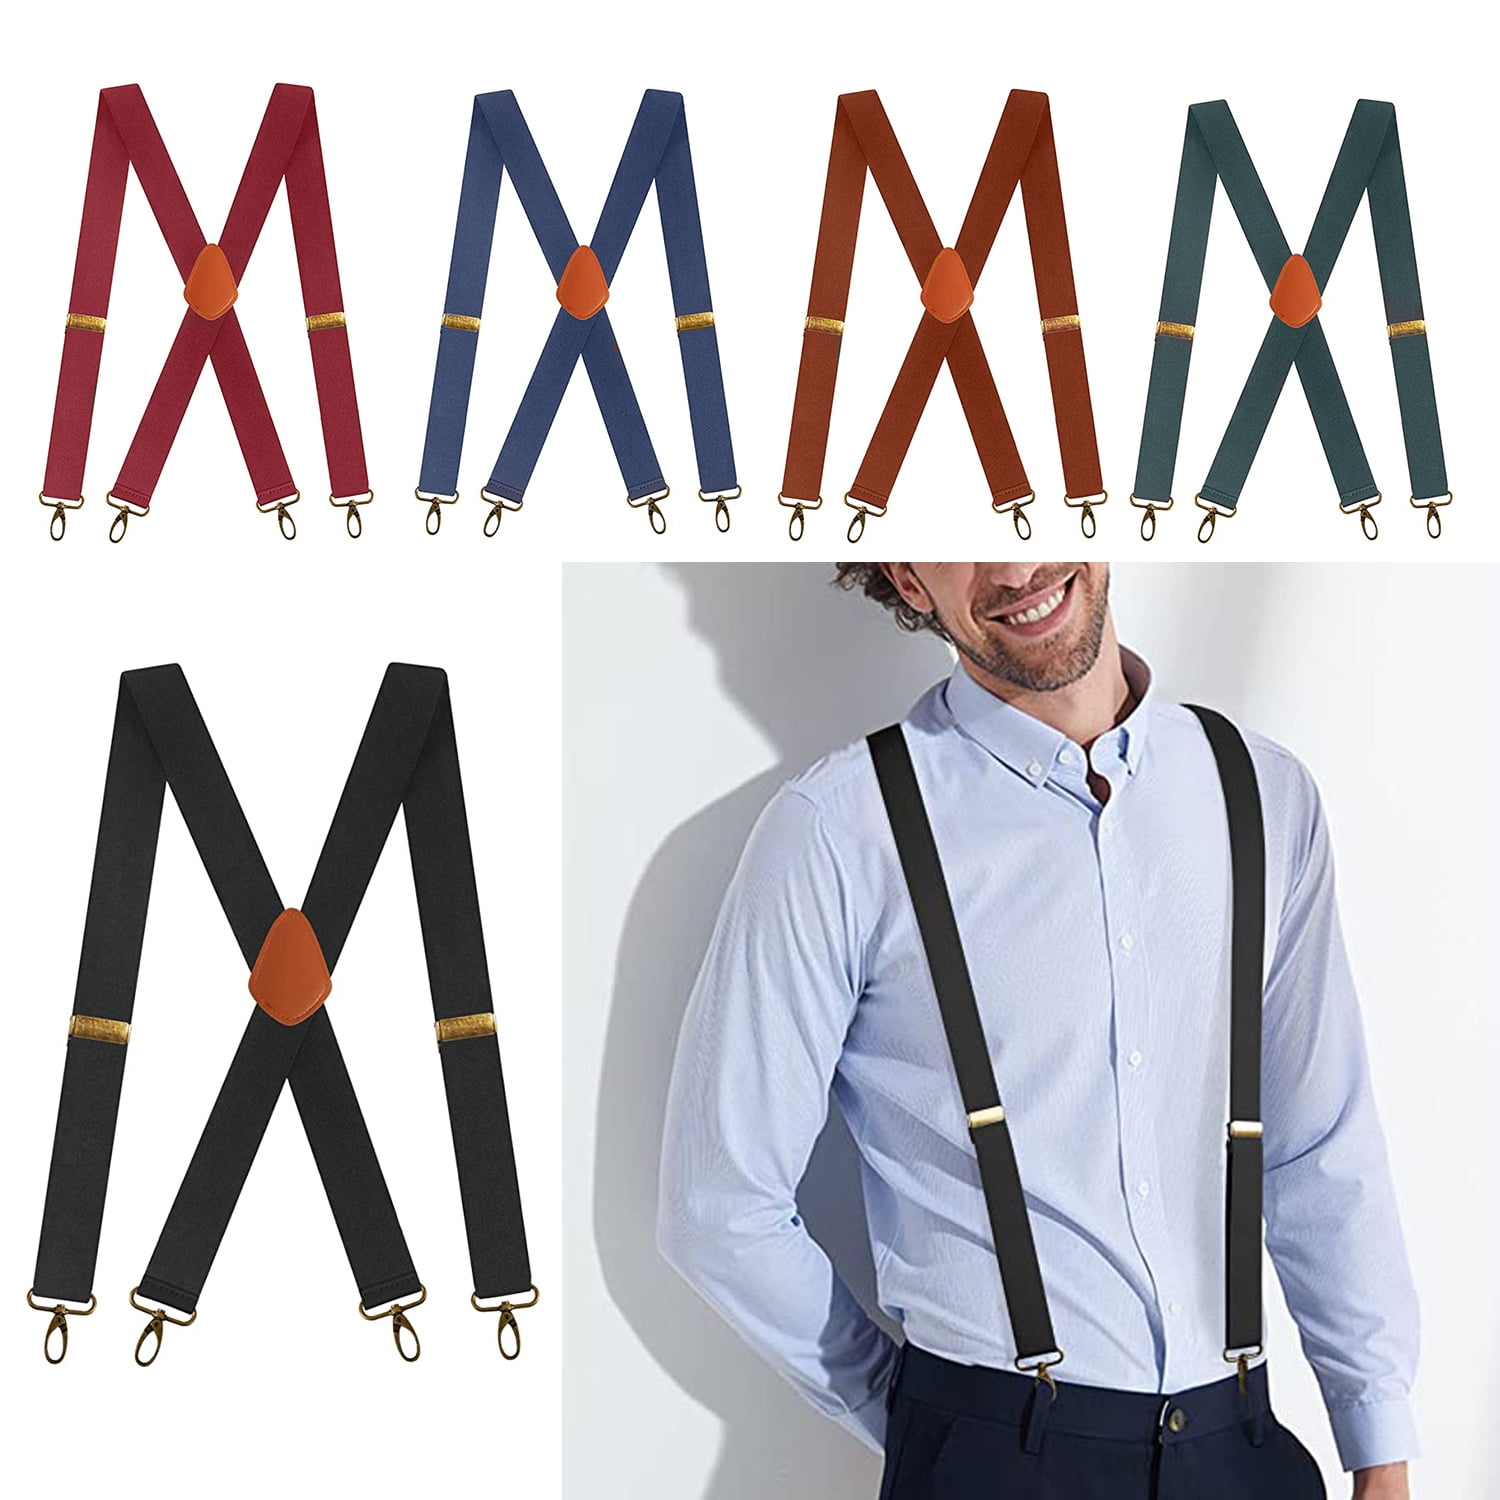 Button Suspenders Faux Leather Elastic Retro 6 Hole Braces Belts Navy Lot of 10 